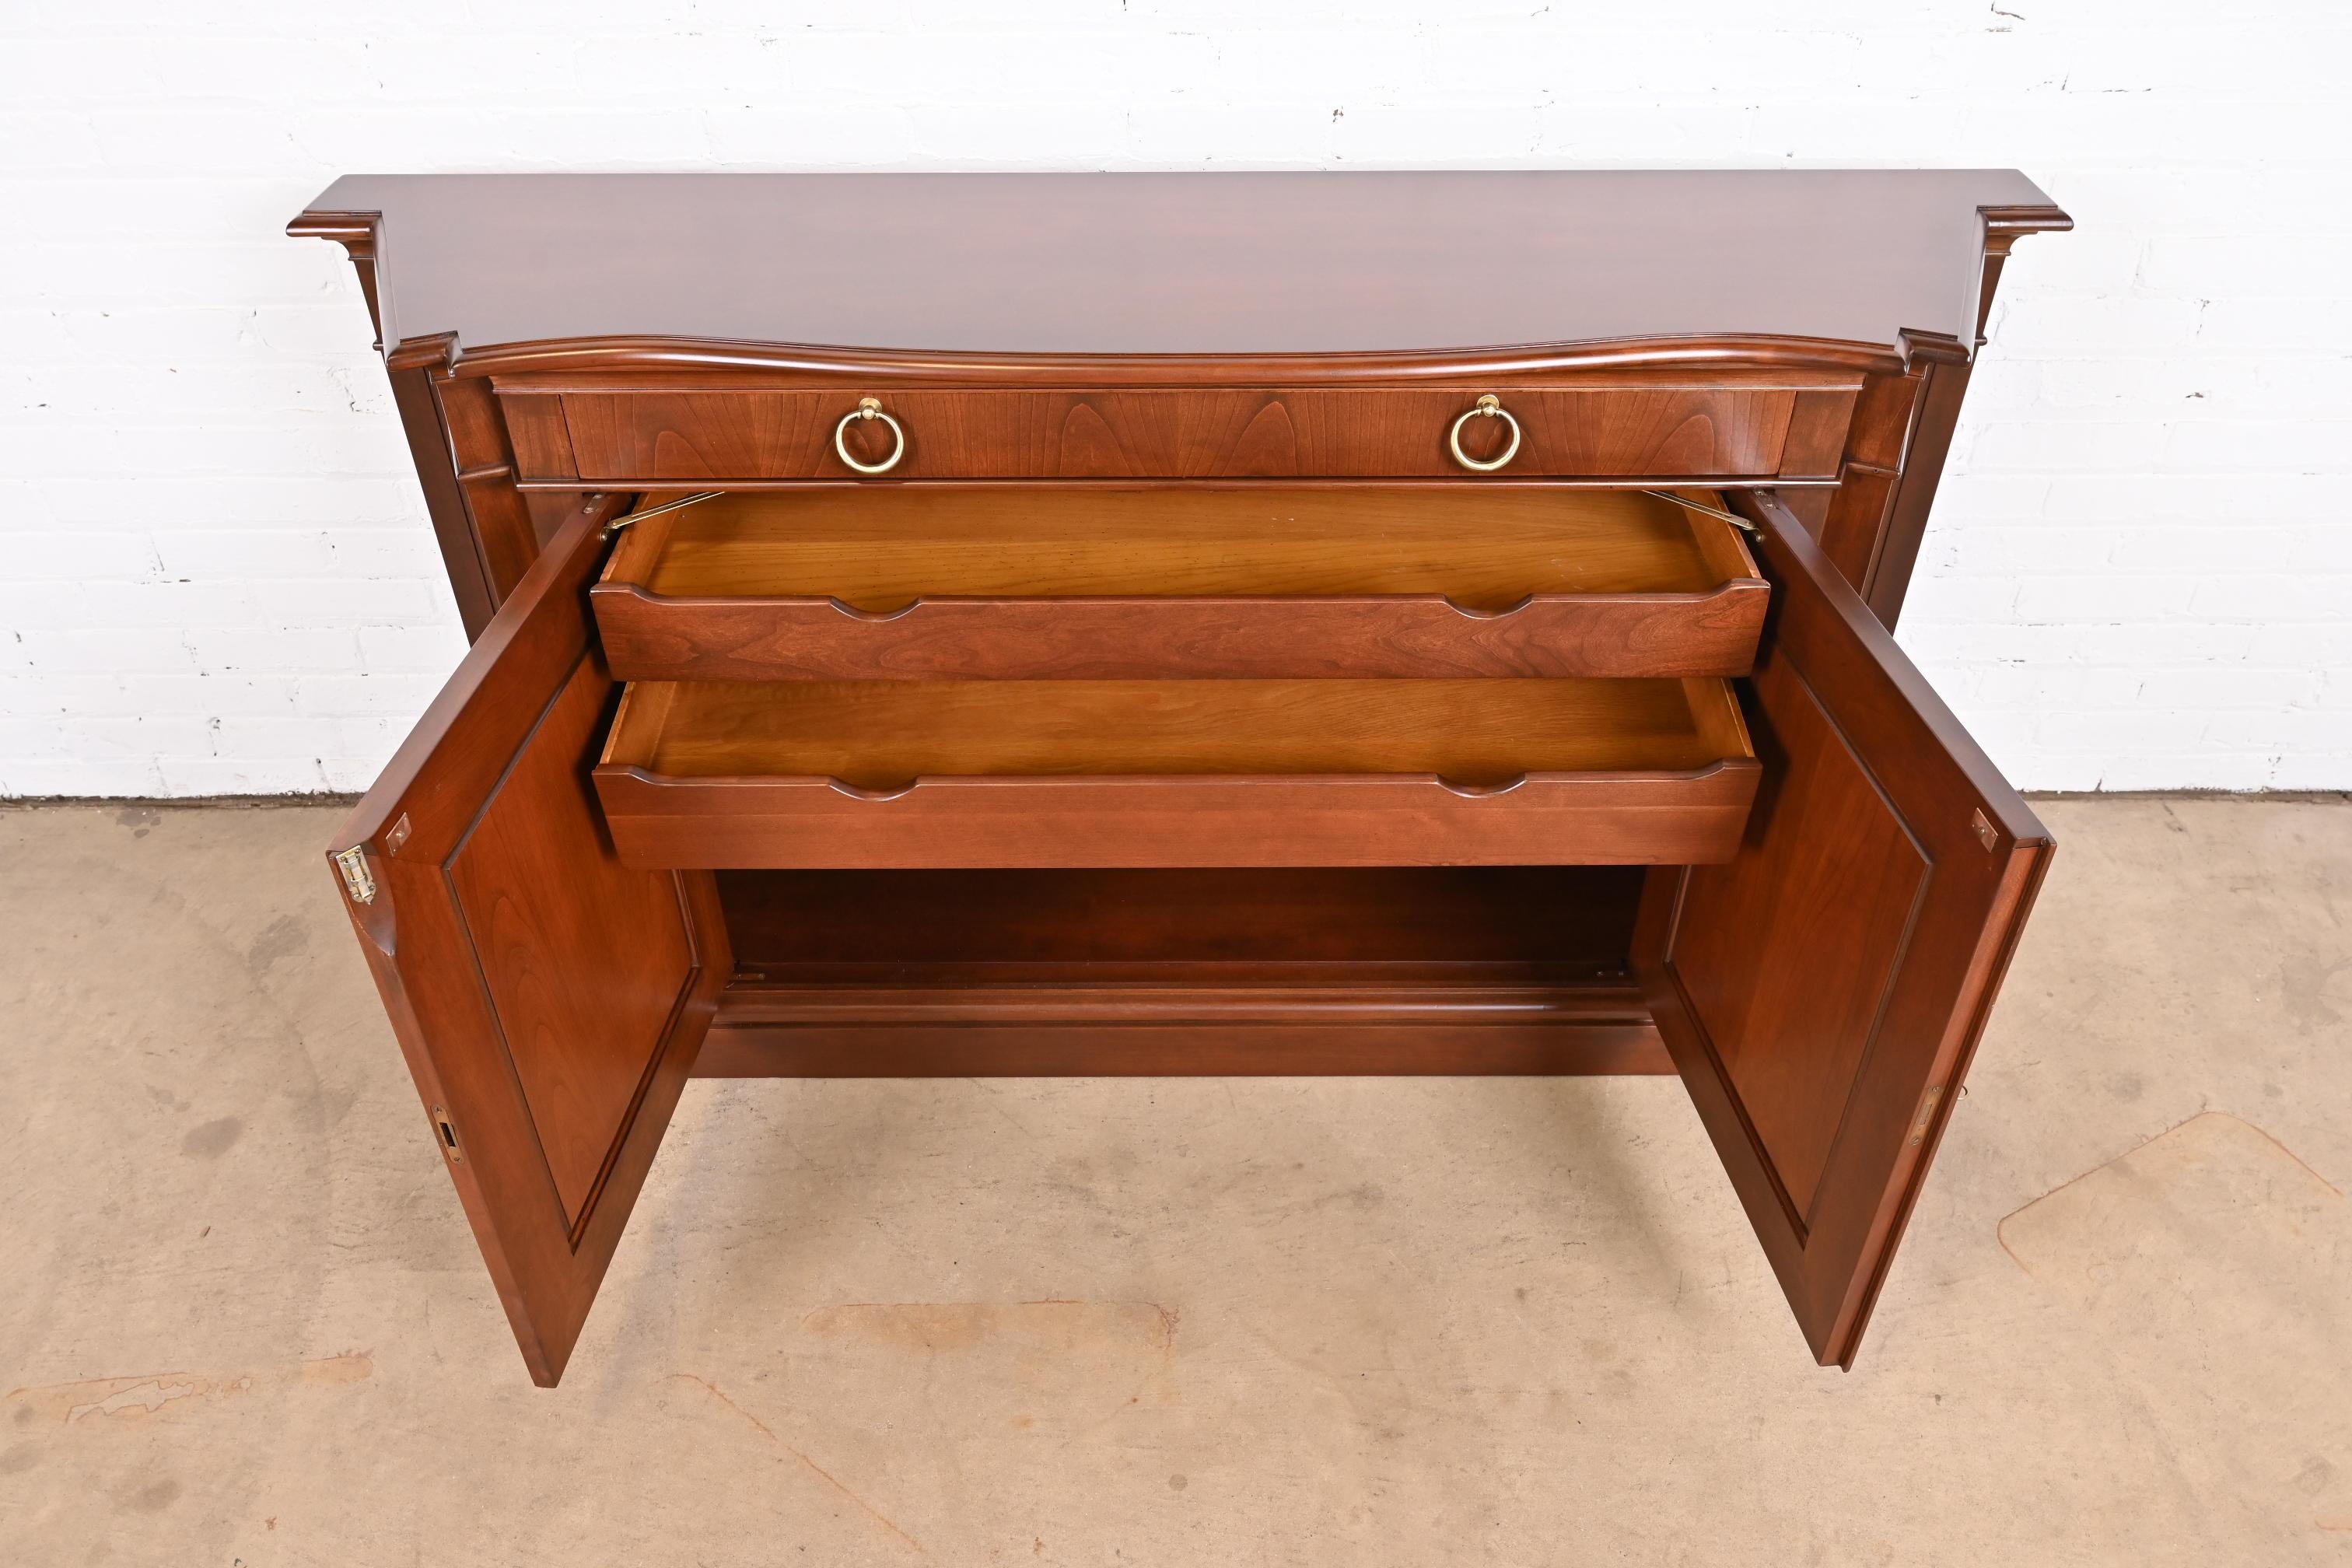 Baker Furniture French Regency Cherry Wood Sideboard or Bar Cabinet, Refinished 2